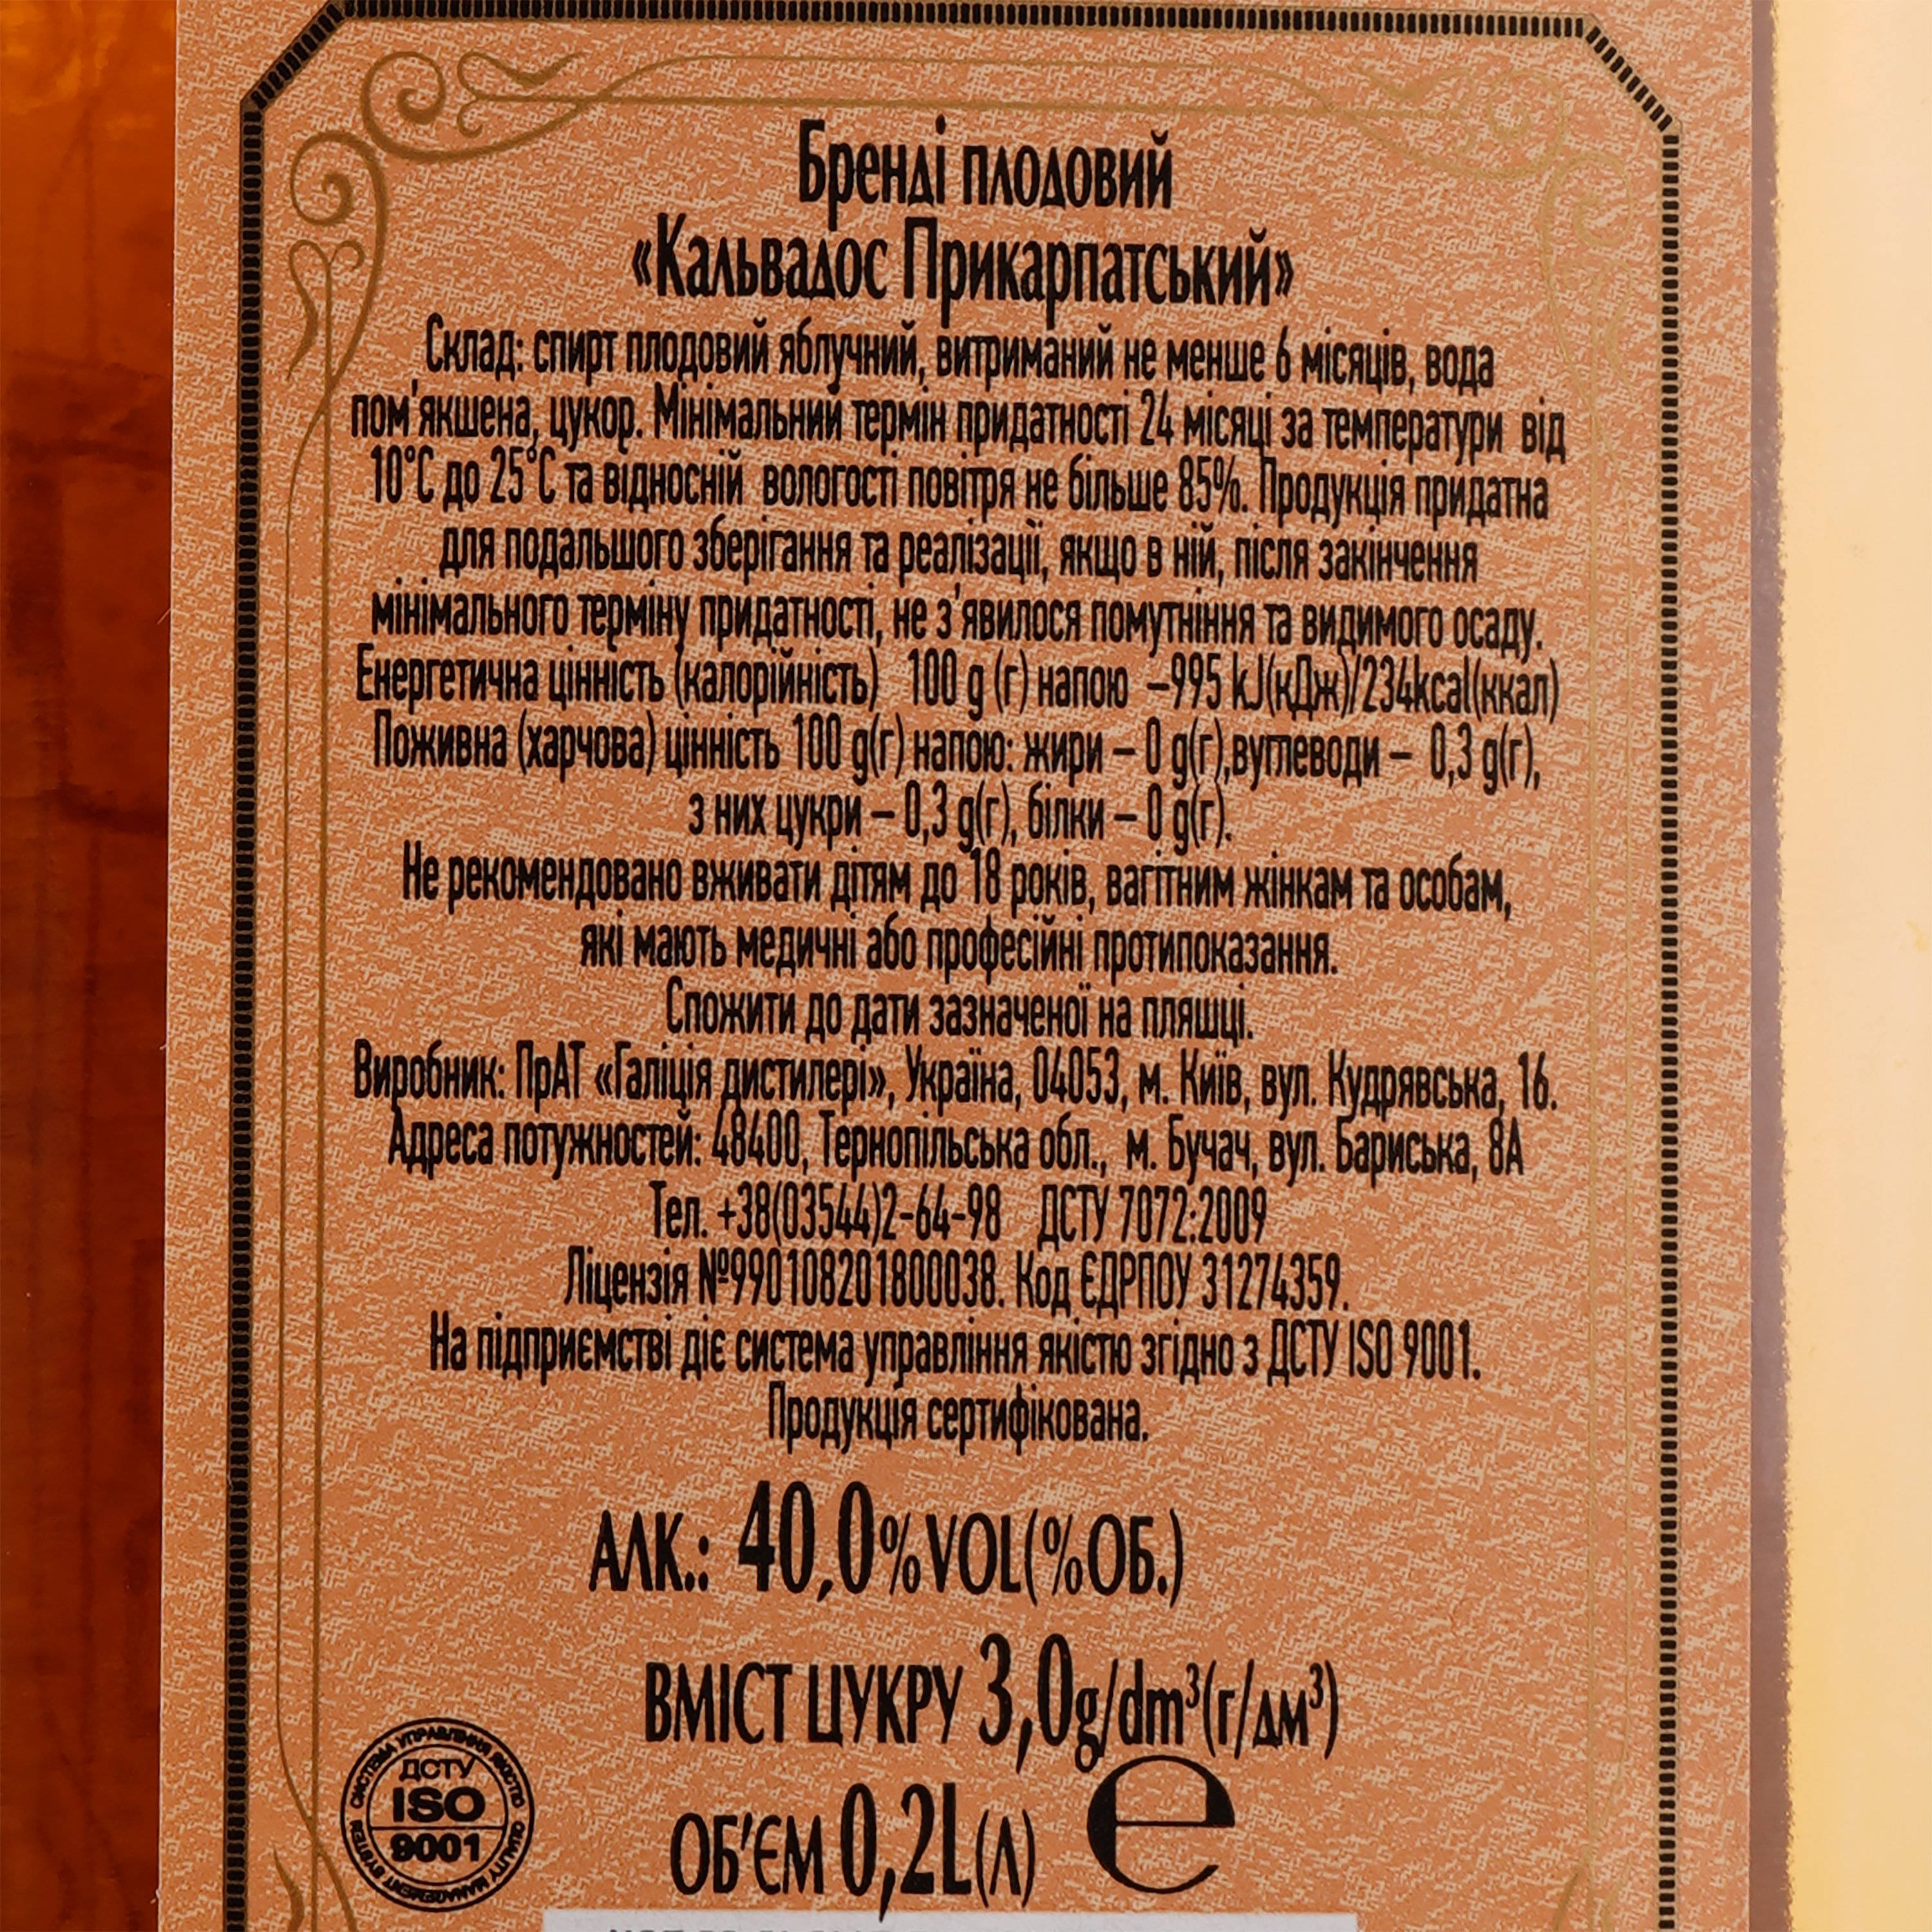 Бренди Прикарпатский Кальвадос, 40%, 0,2 л (812663) - фото 3